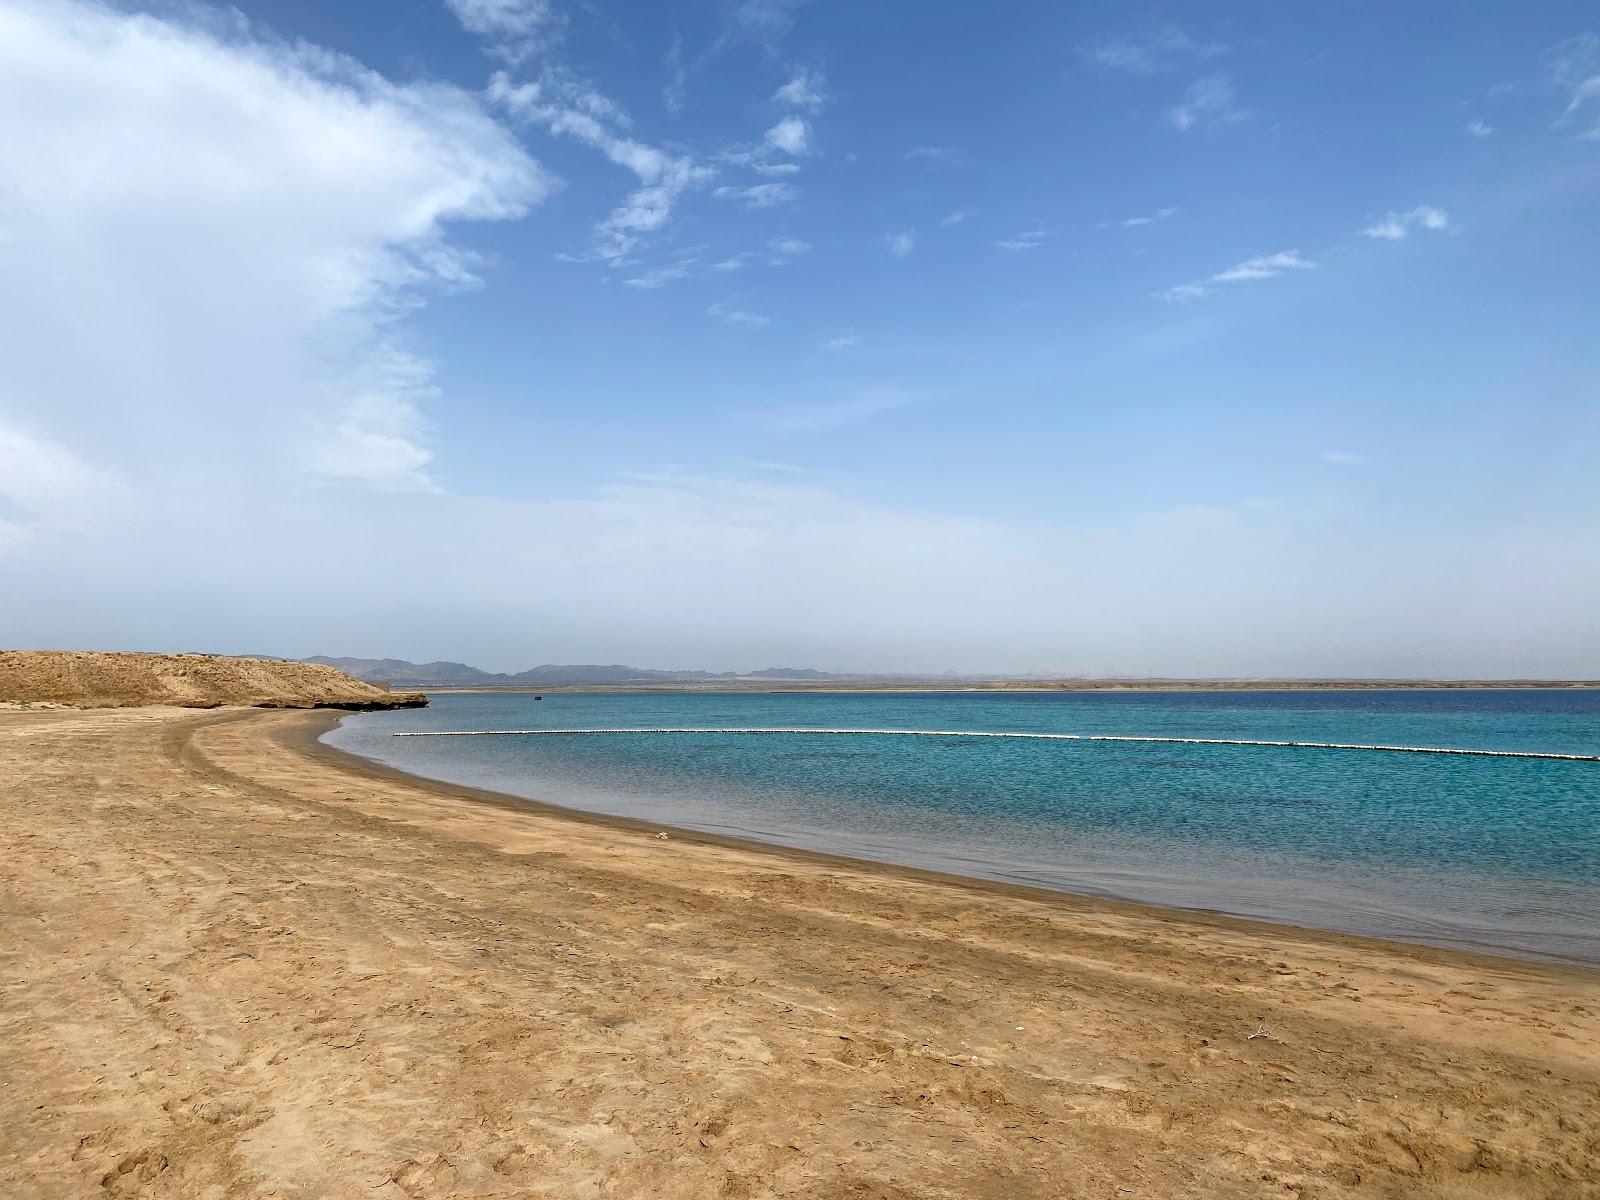 AL Hesi Beach Photo - Sandee